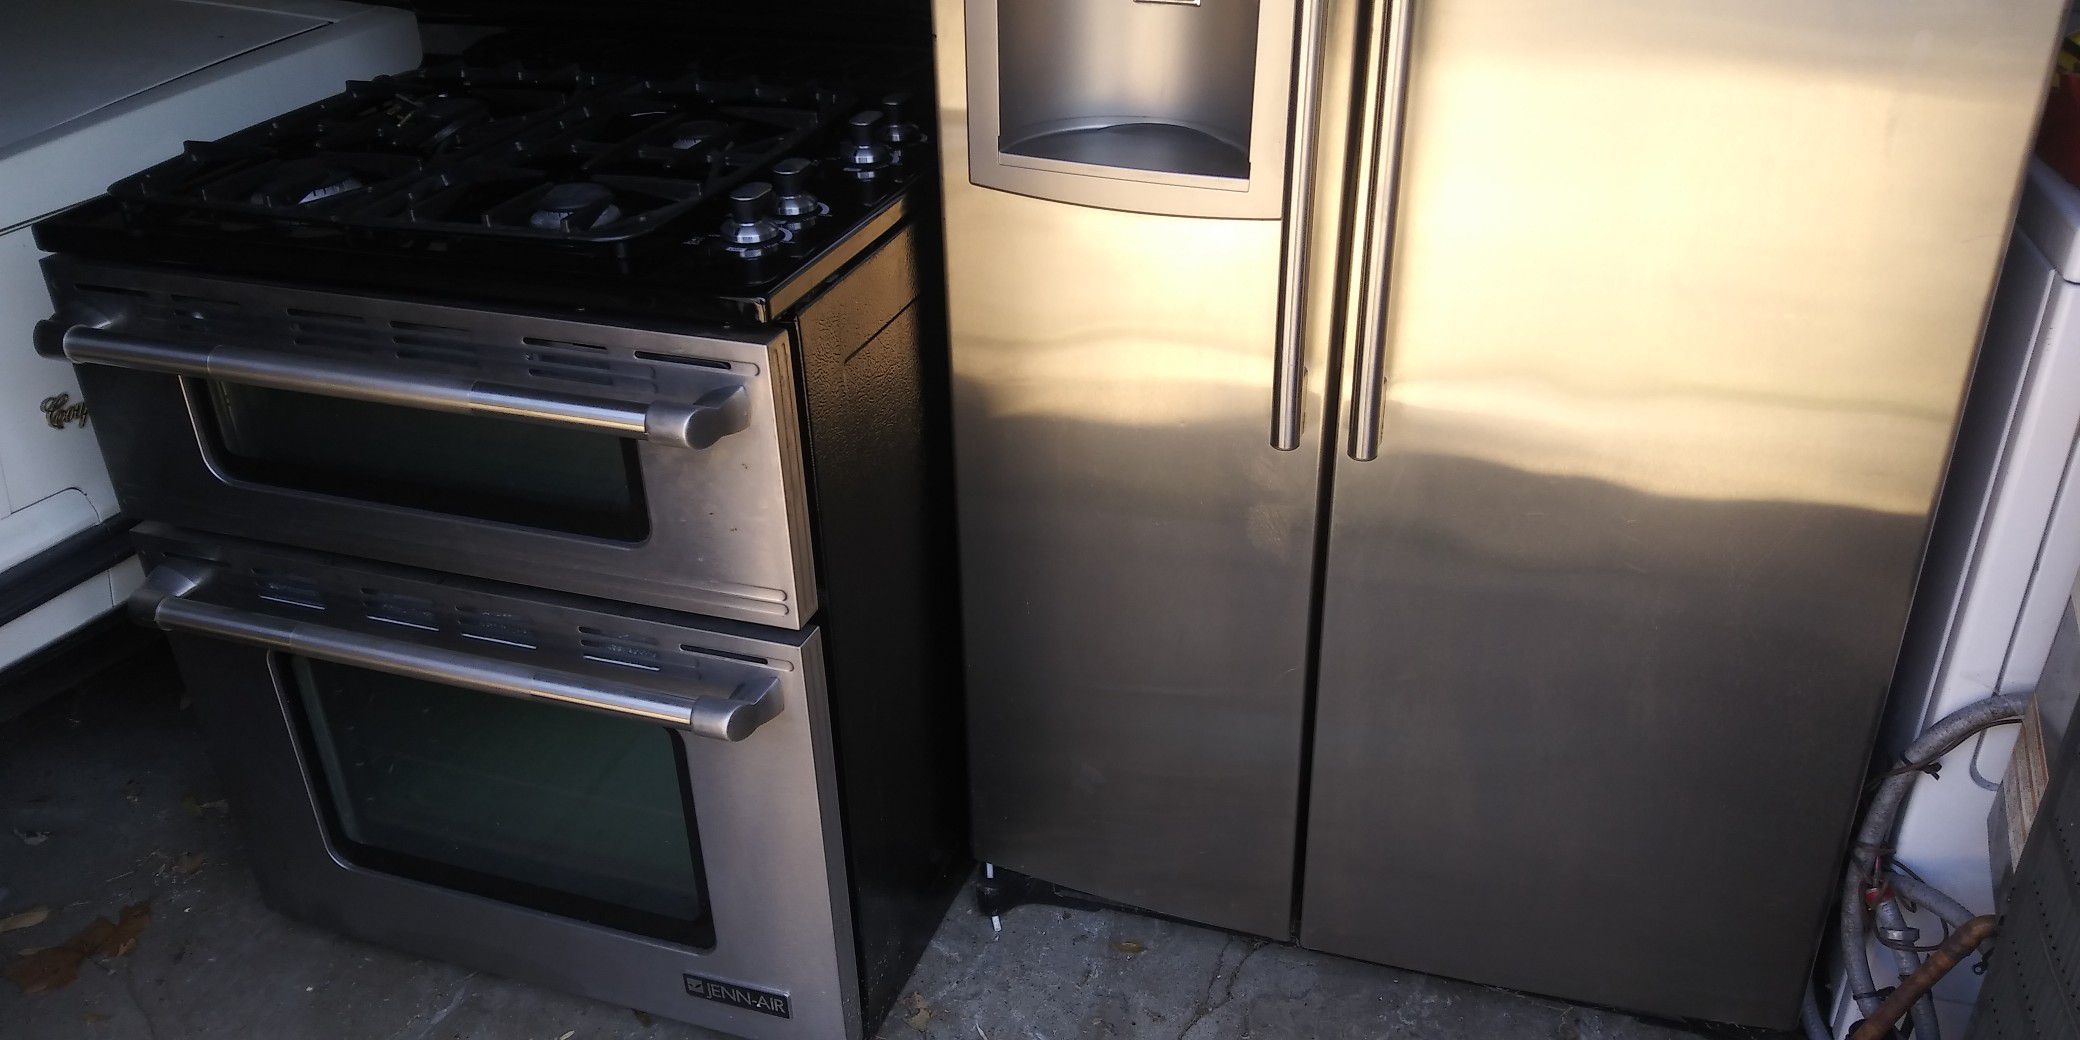 Stainless steel Jenn-Air stove LG refrigerator